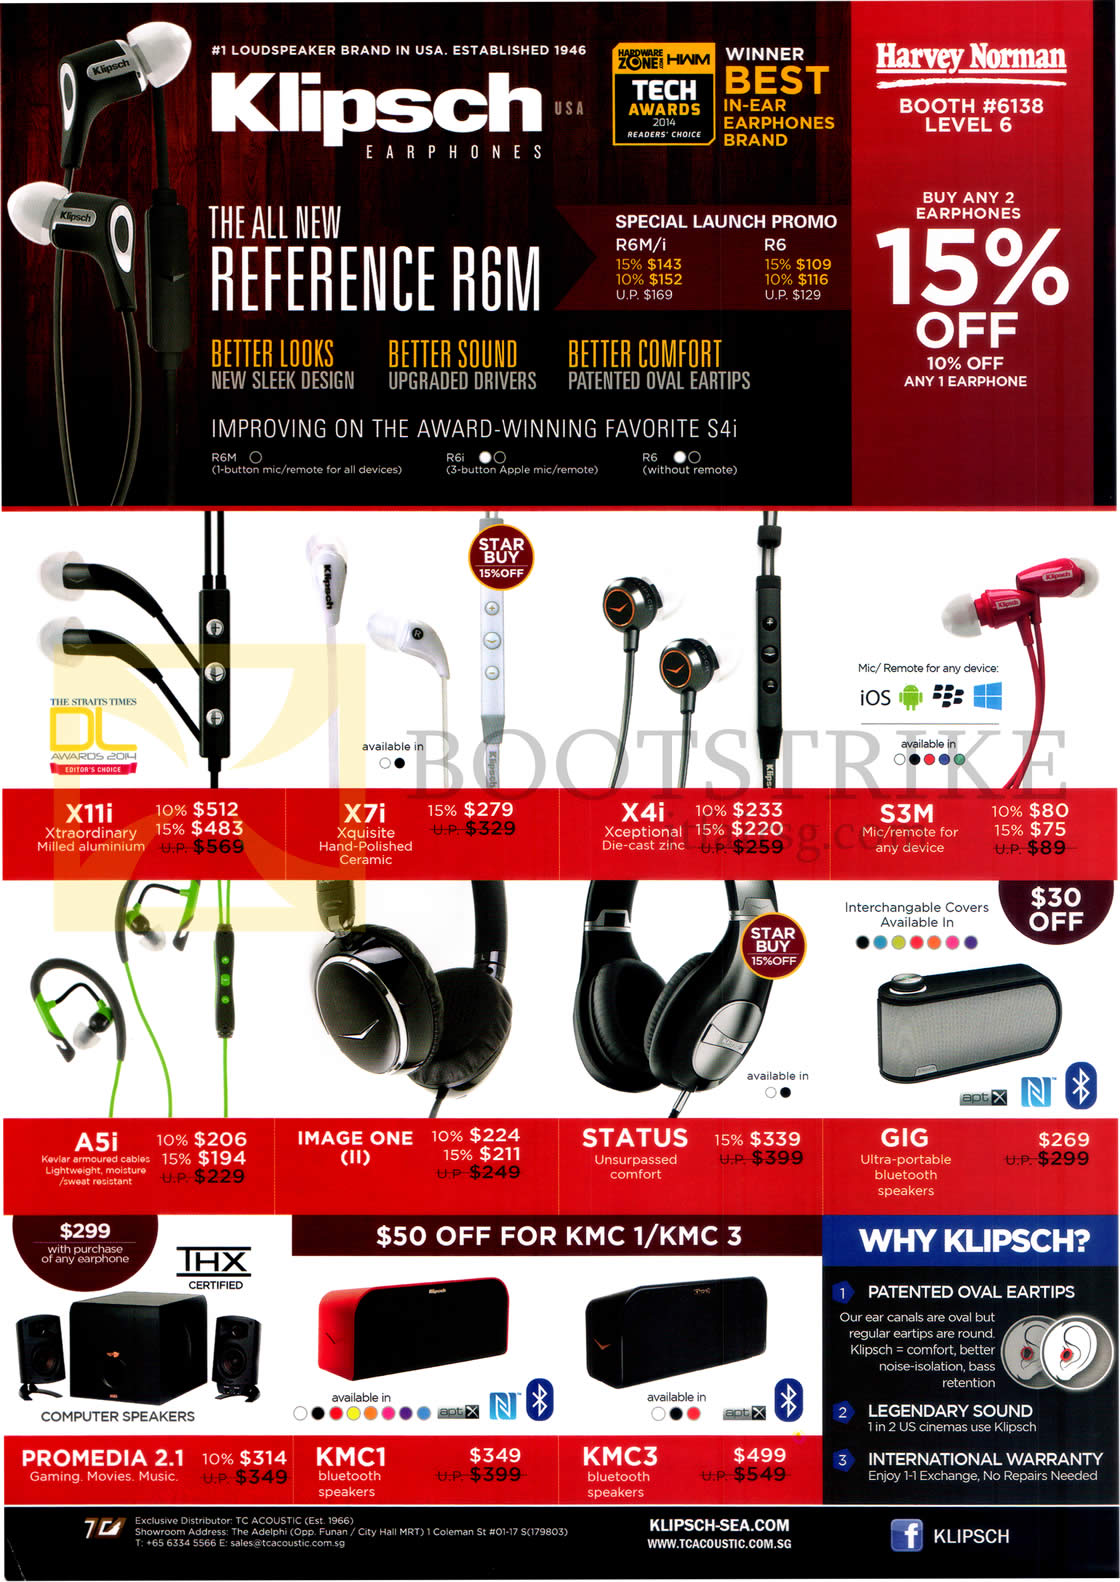 COMEX 2014 price list image brochure of Klipsch (Harvey Norman) Headphones, Earphones, X11i, X7i, X4i, S3M, A5i, Image One, Status, GIG, Promedia 2.1, KMC1, KMC3